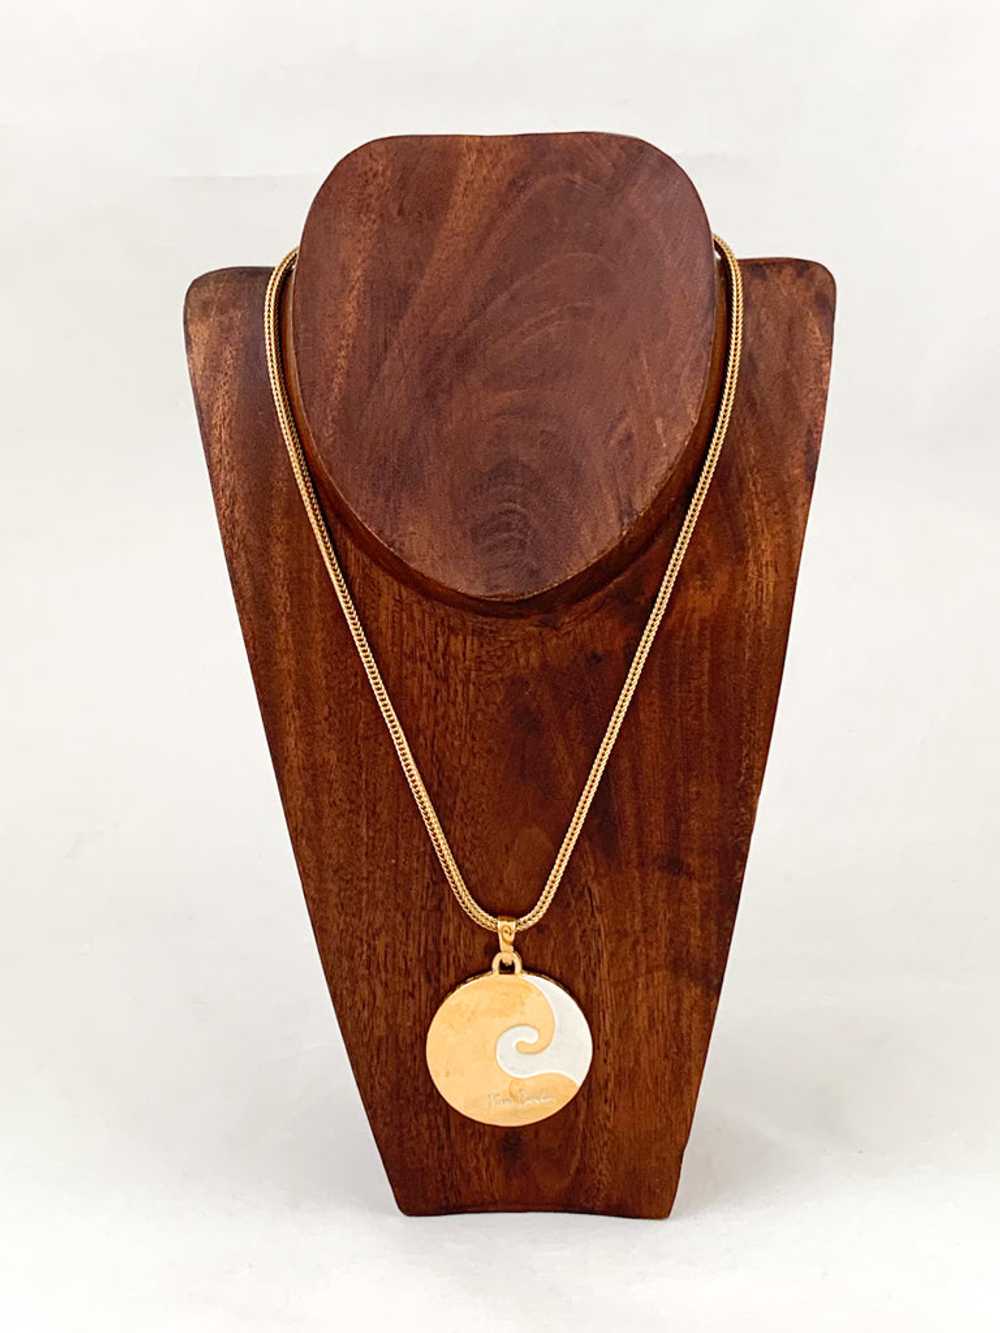 Pierre Cardin Gold Swirl Necklace - image 1